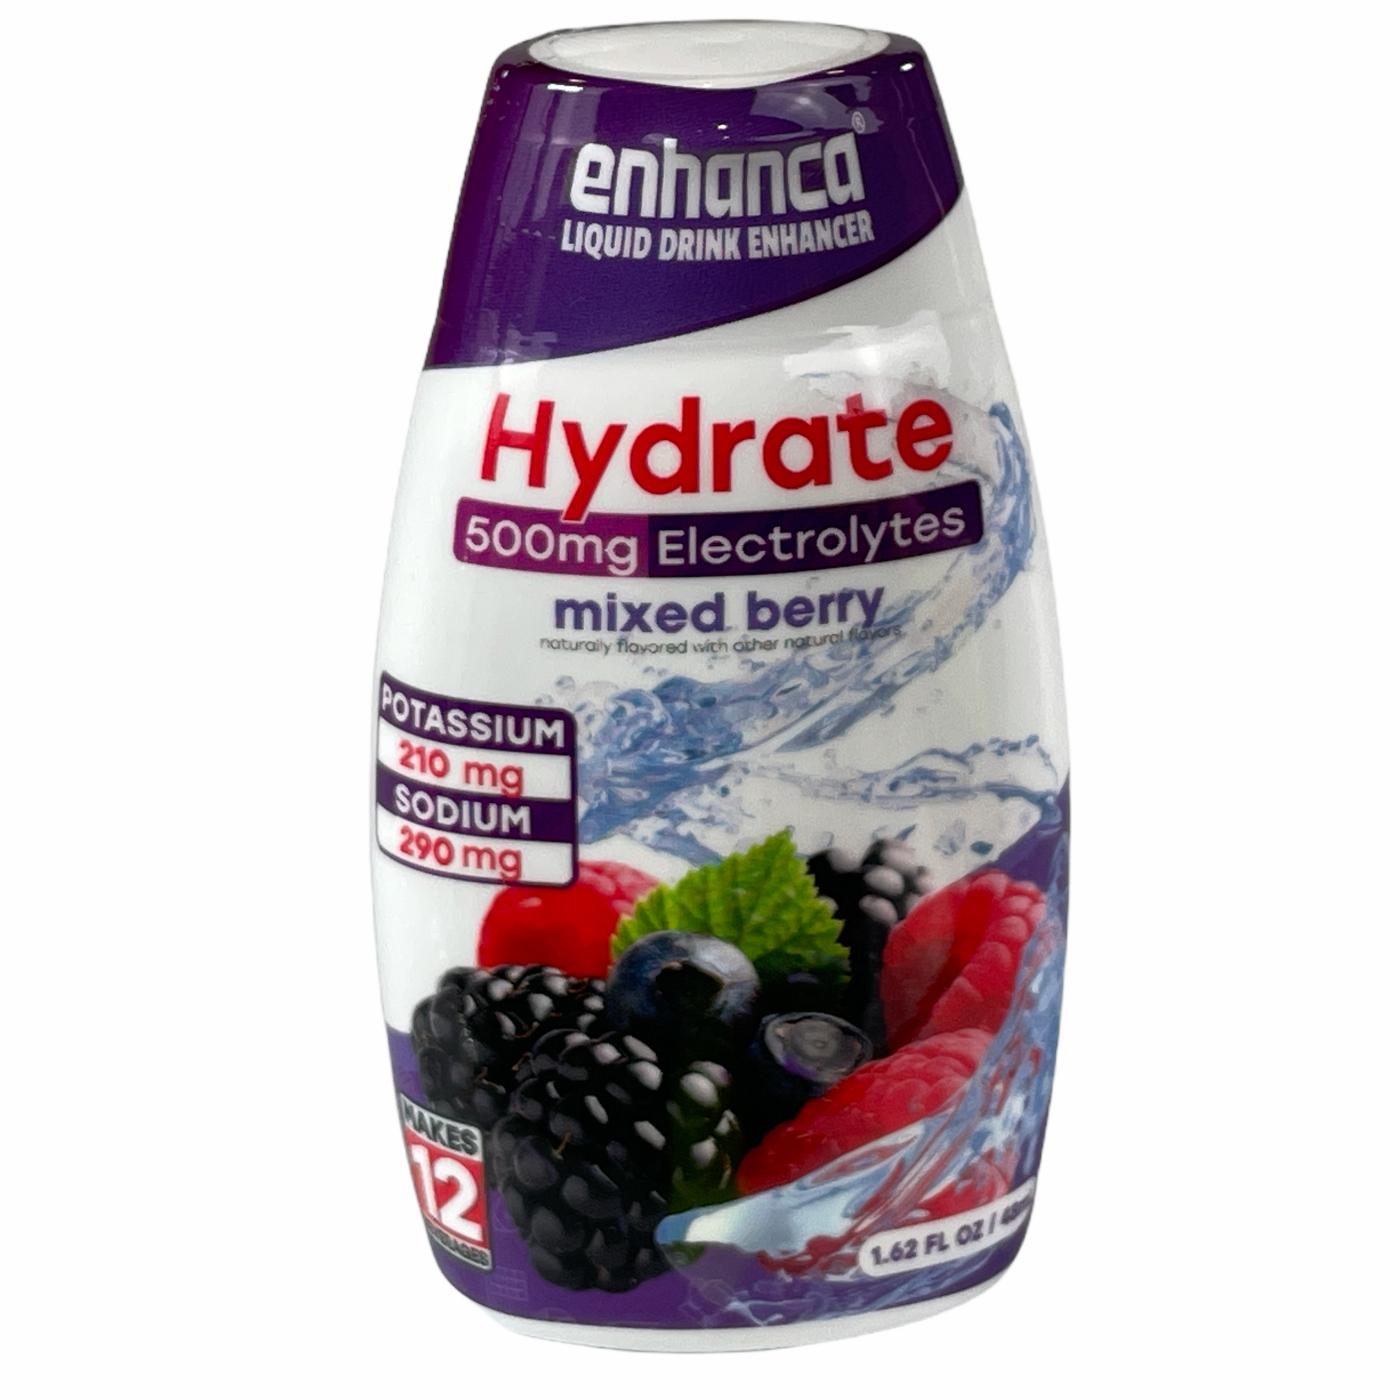 Enhanca Hydrate 500MG Electrolytes Mixed Berry Liquid Drink Enhancer; image 1 of 3